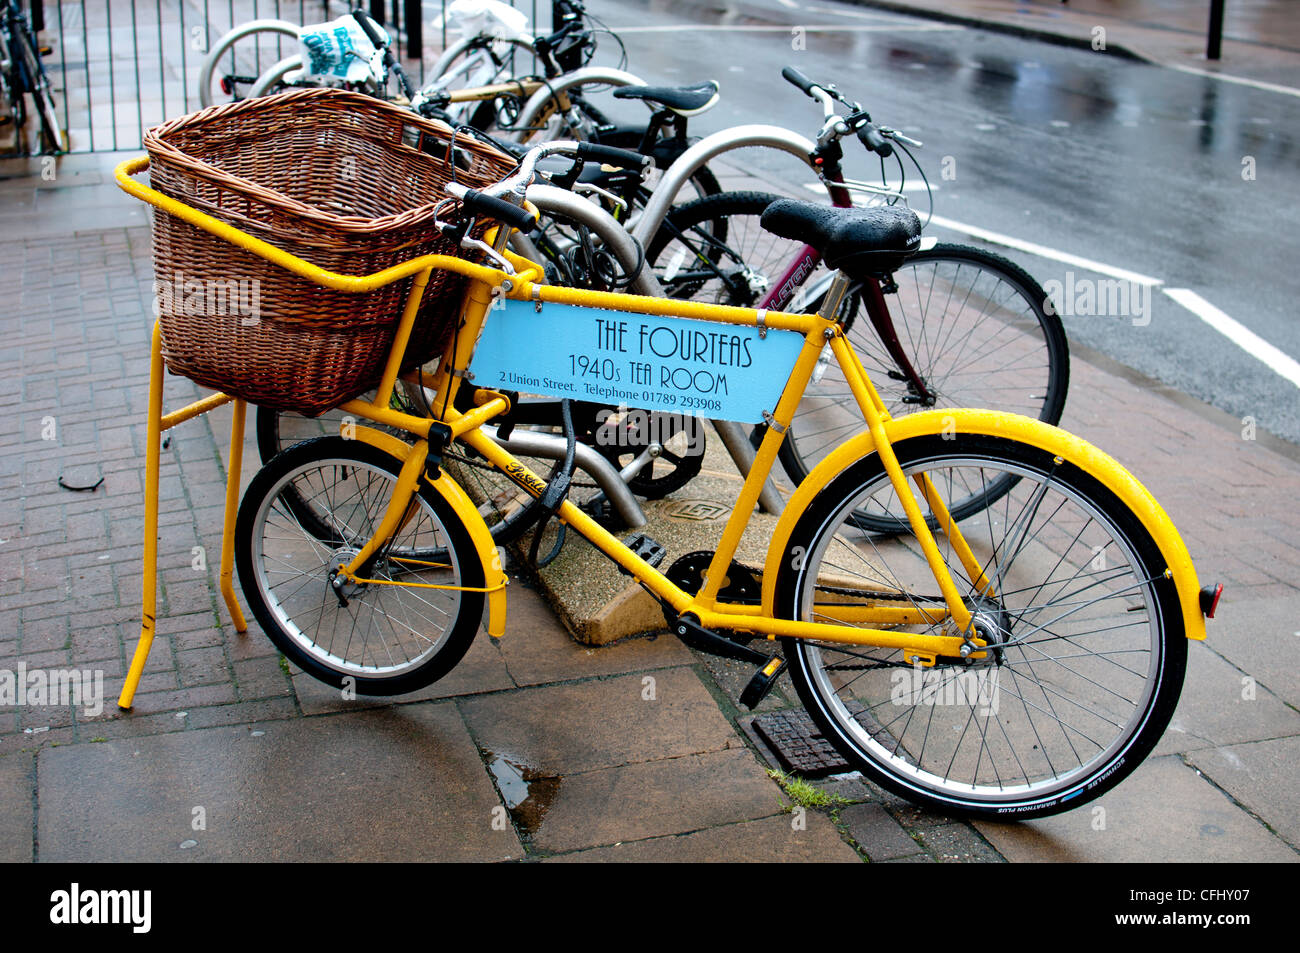 Pashley bicycle Stock Photo